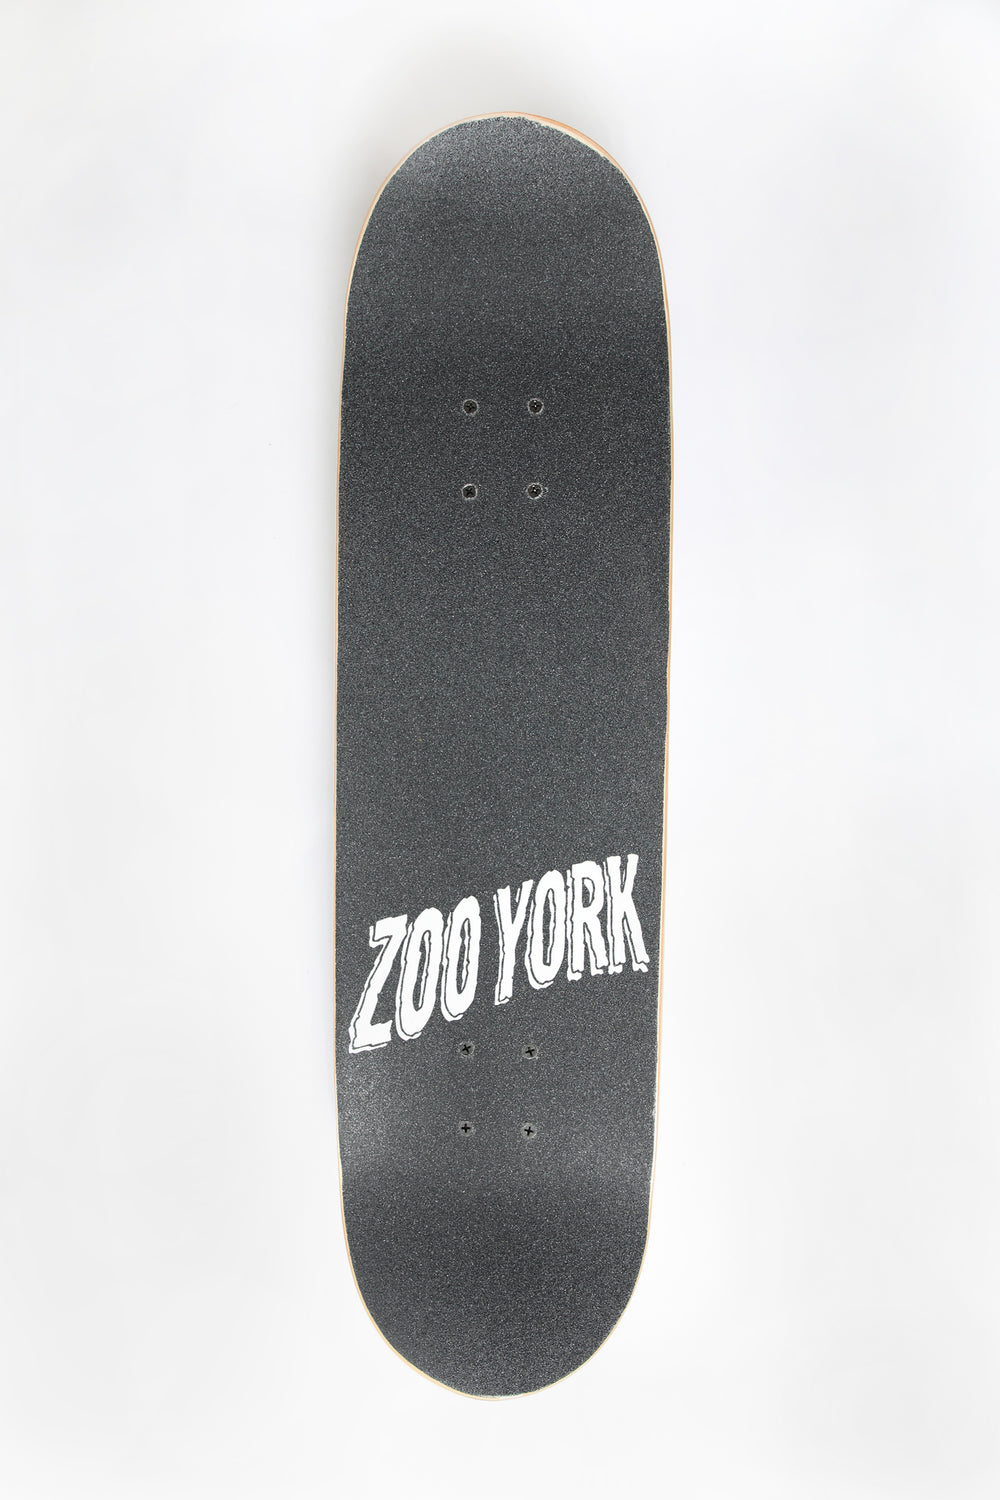 Zoo York Attacked Skateboard 8.25